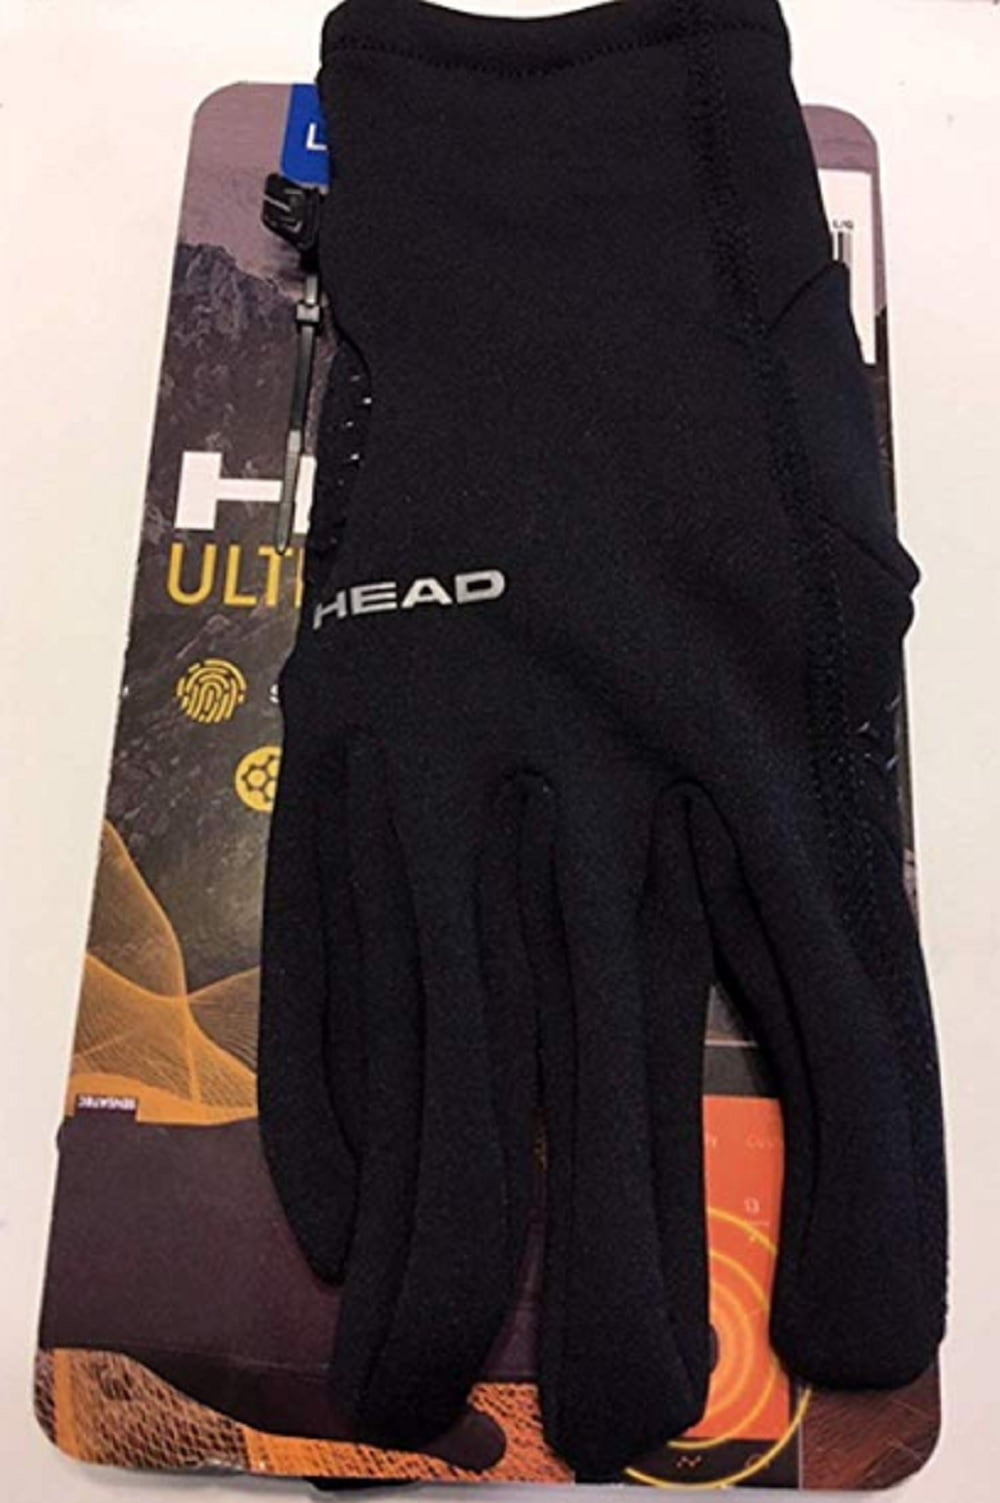 HEAD Sensatec Men's UltraFit Touchscreen Running Gloves Black 4 Size Available for sale online 